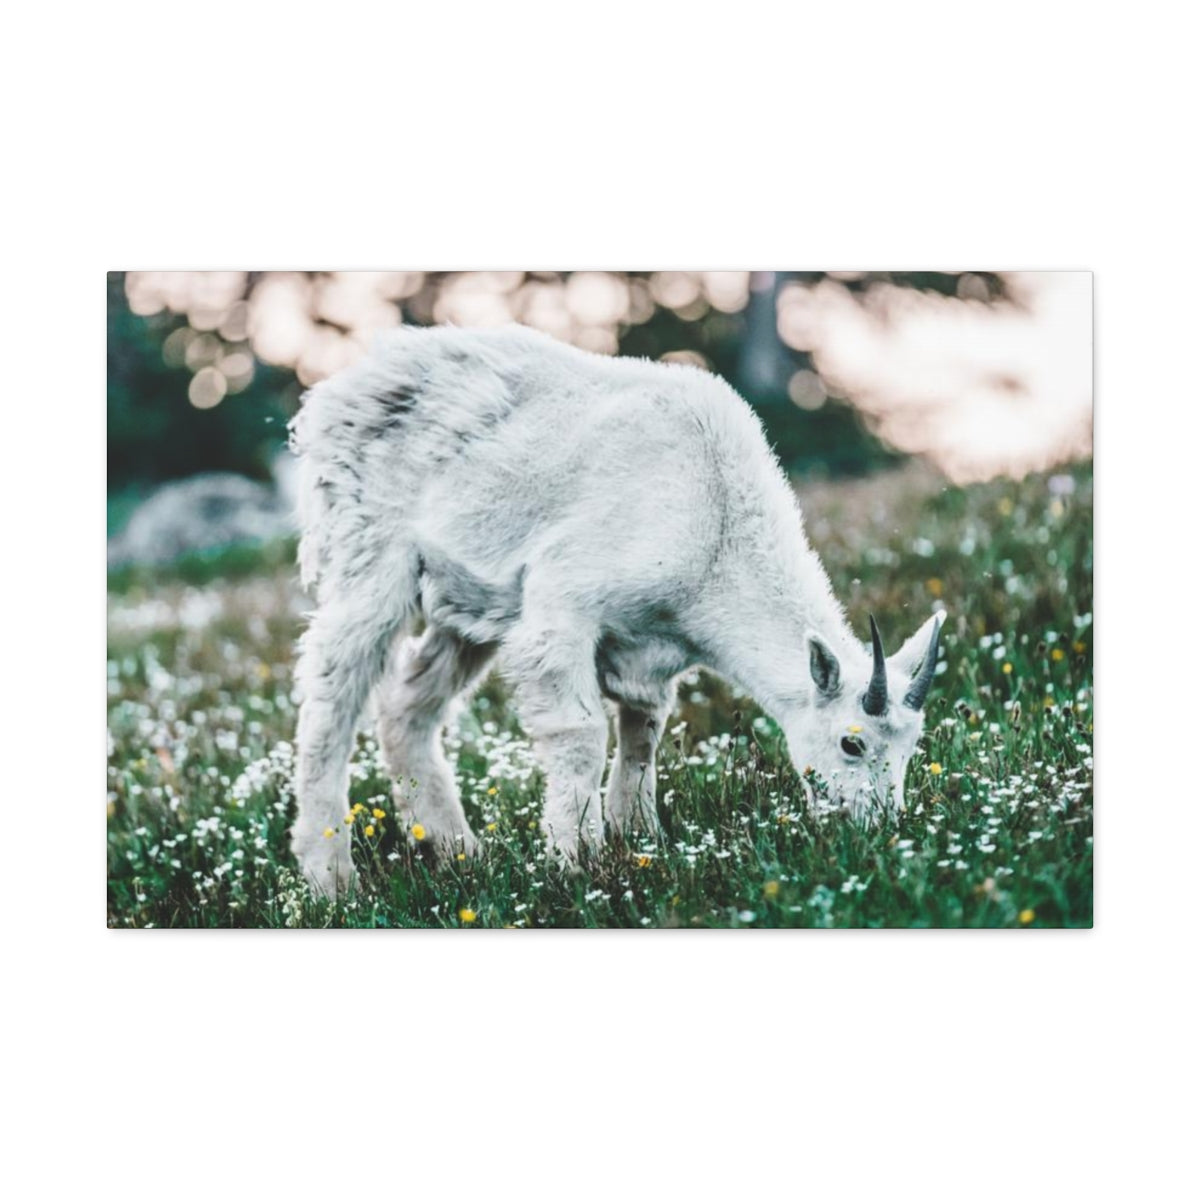 Mountain Goat in Glacier National Park